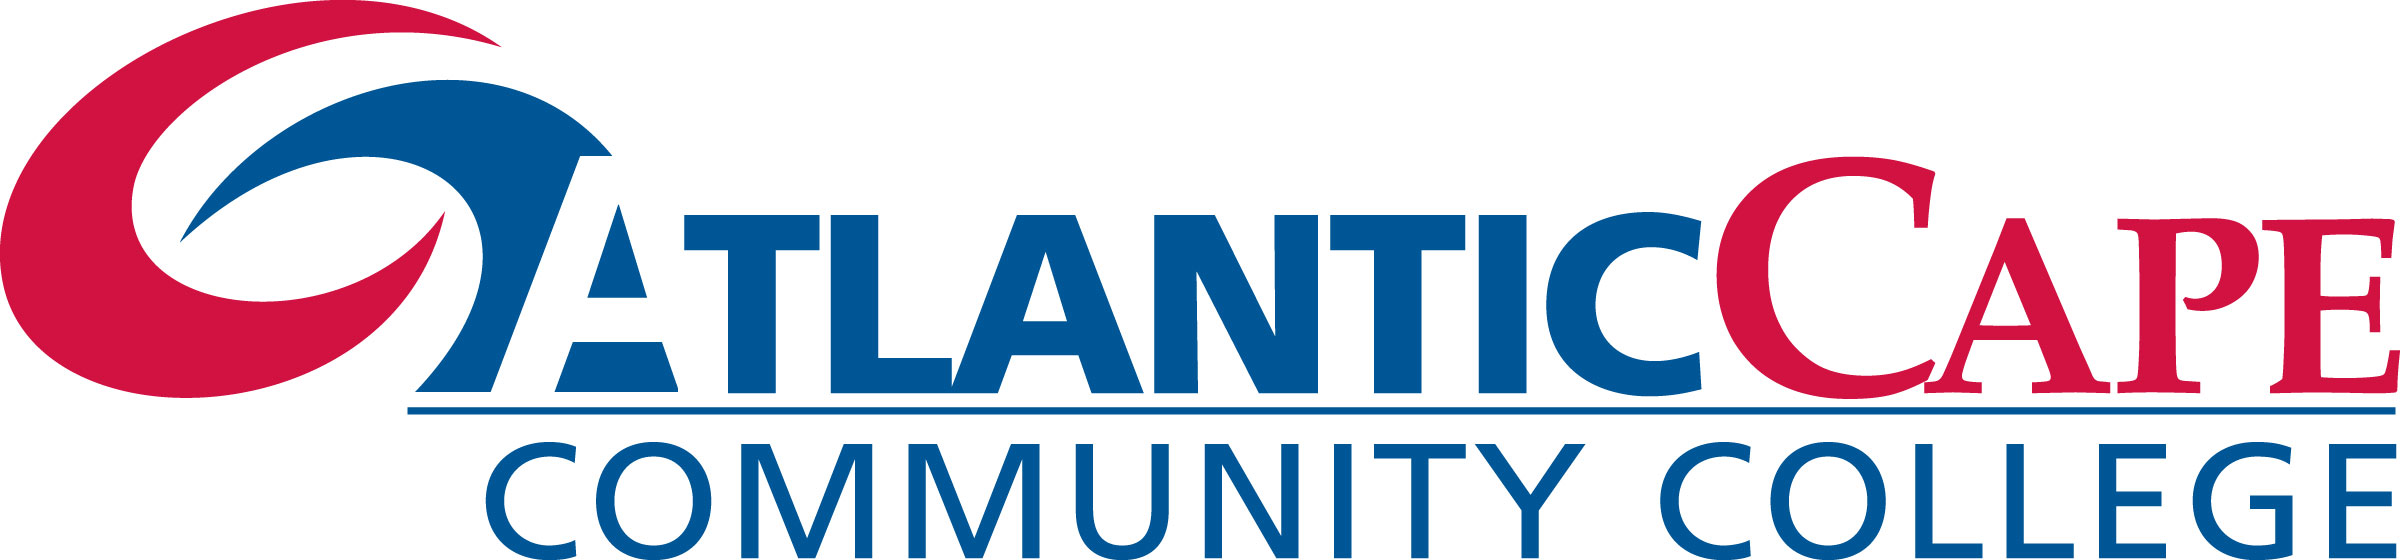 Atlantic Cape Logo - Atlantic Cape